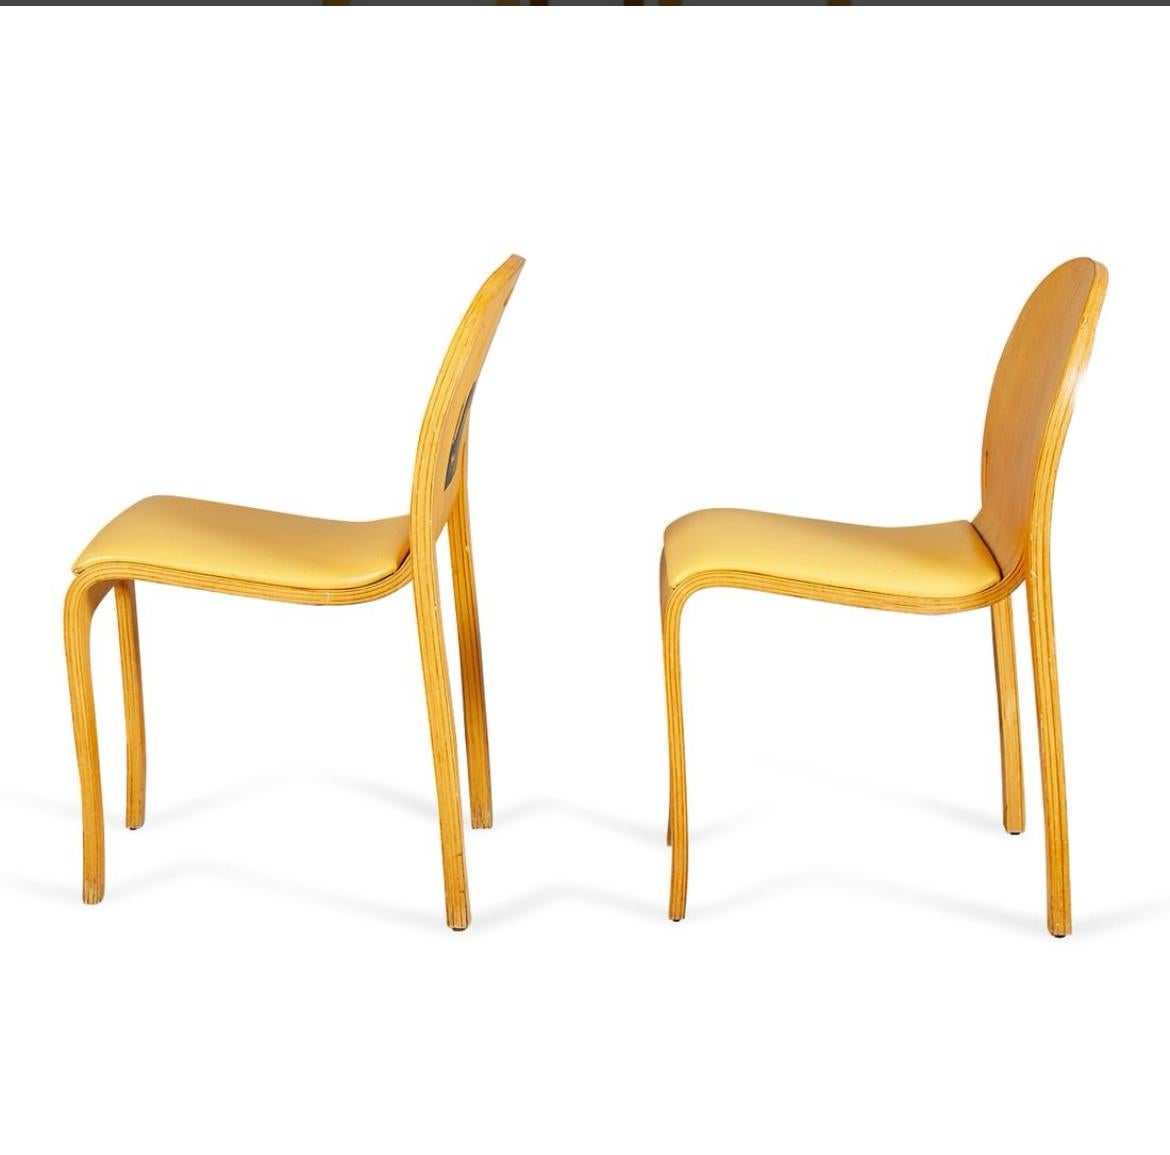 American 4 Peter Danko Design Mid Century Modern Bodyform Chairs Bent Wood For Sale